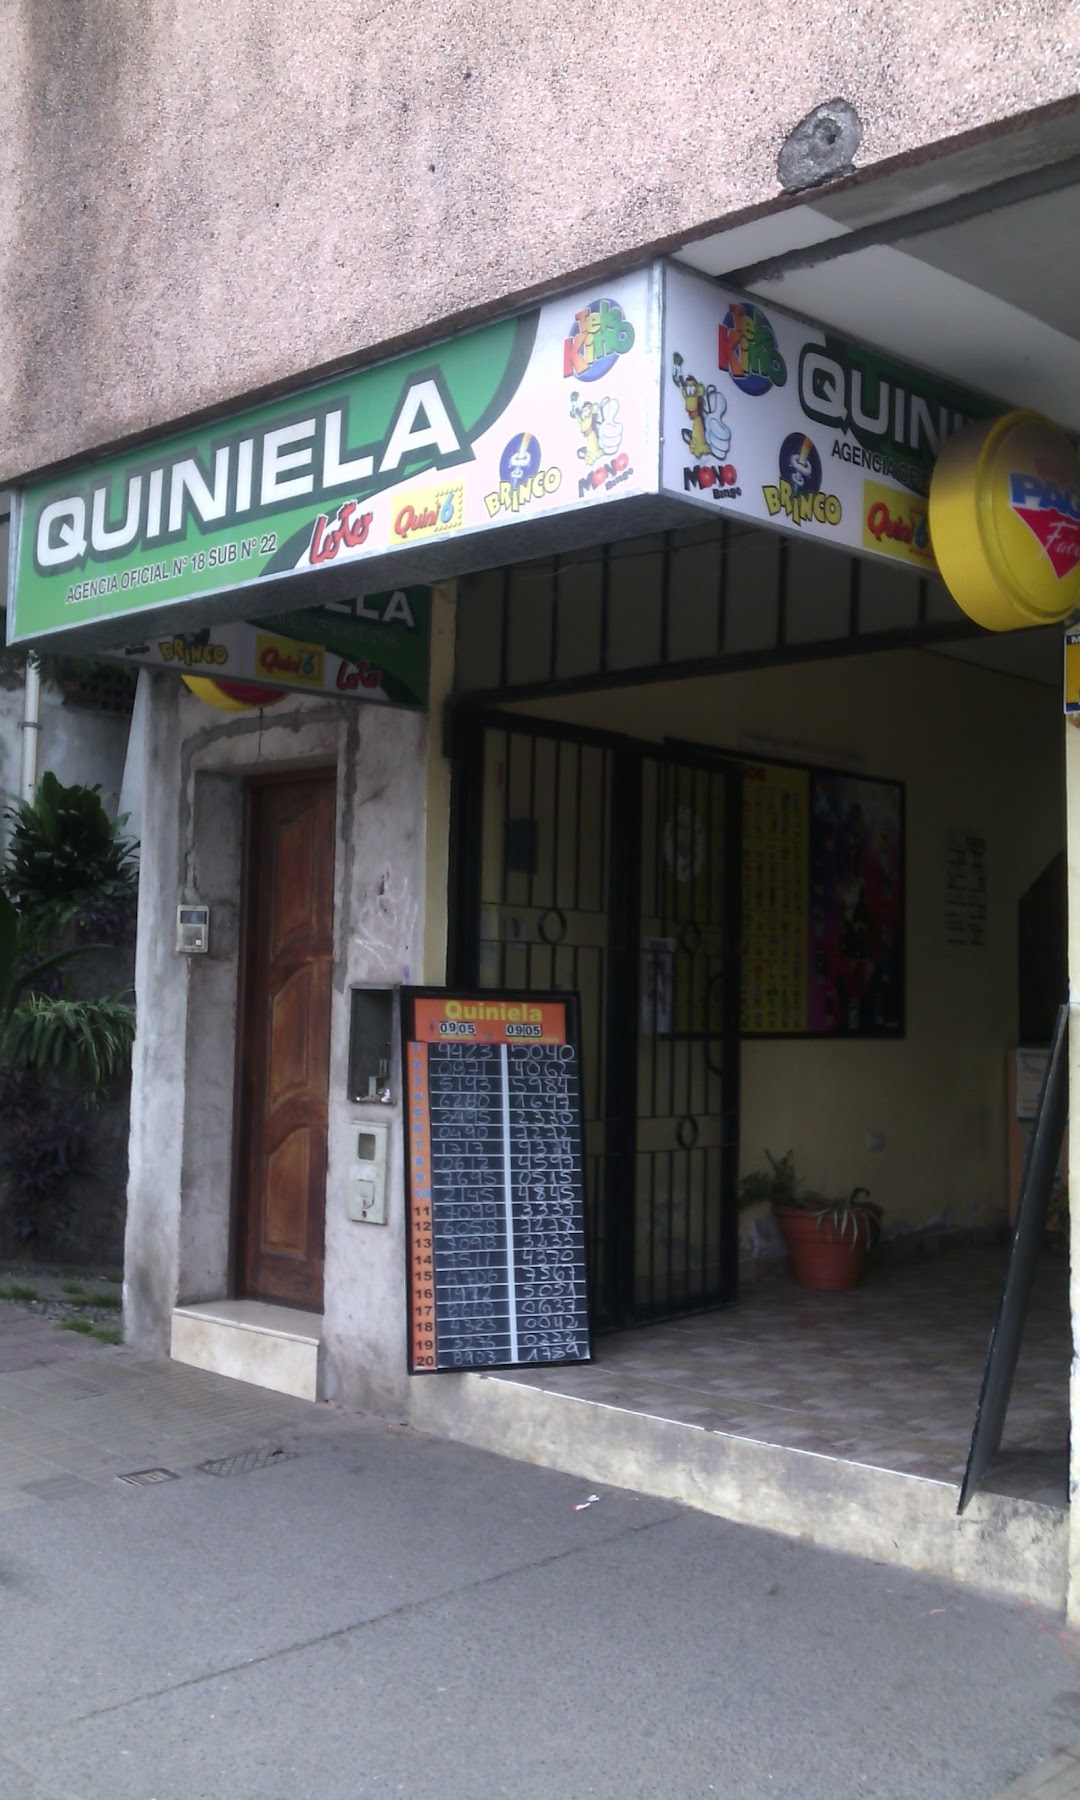 Quiniela Agencia Oficial N 18 Sub N 22